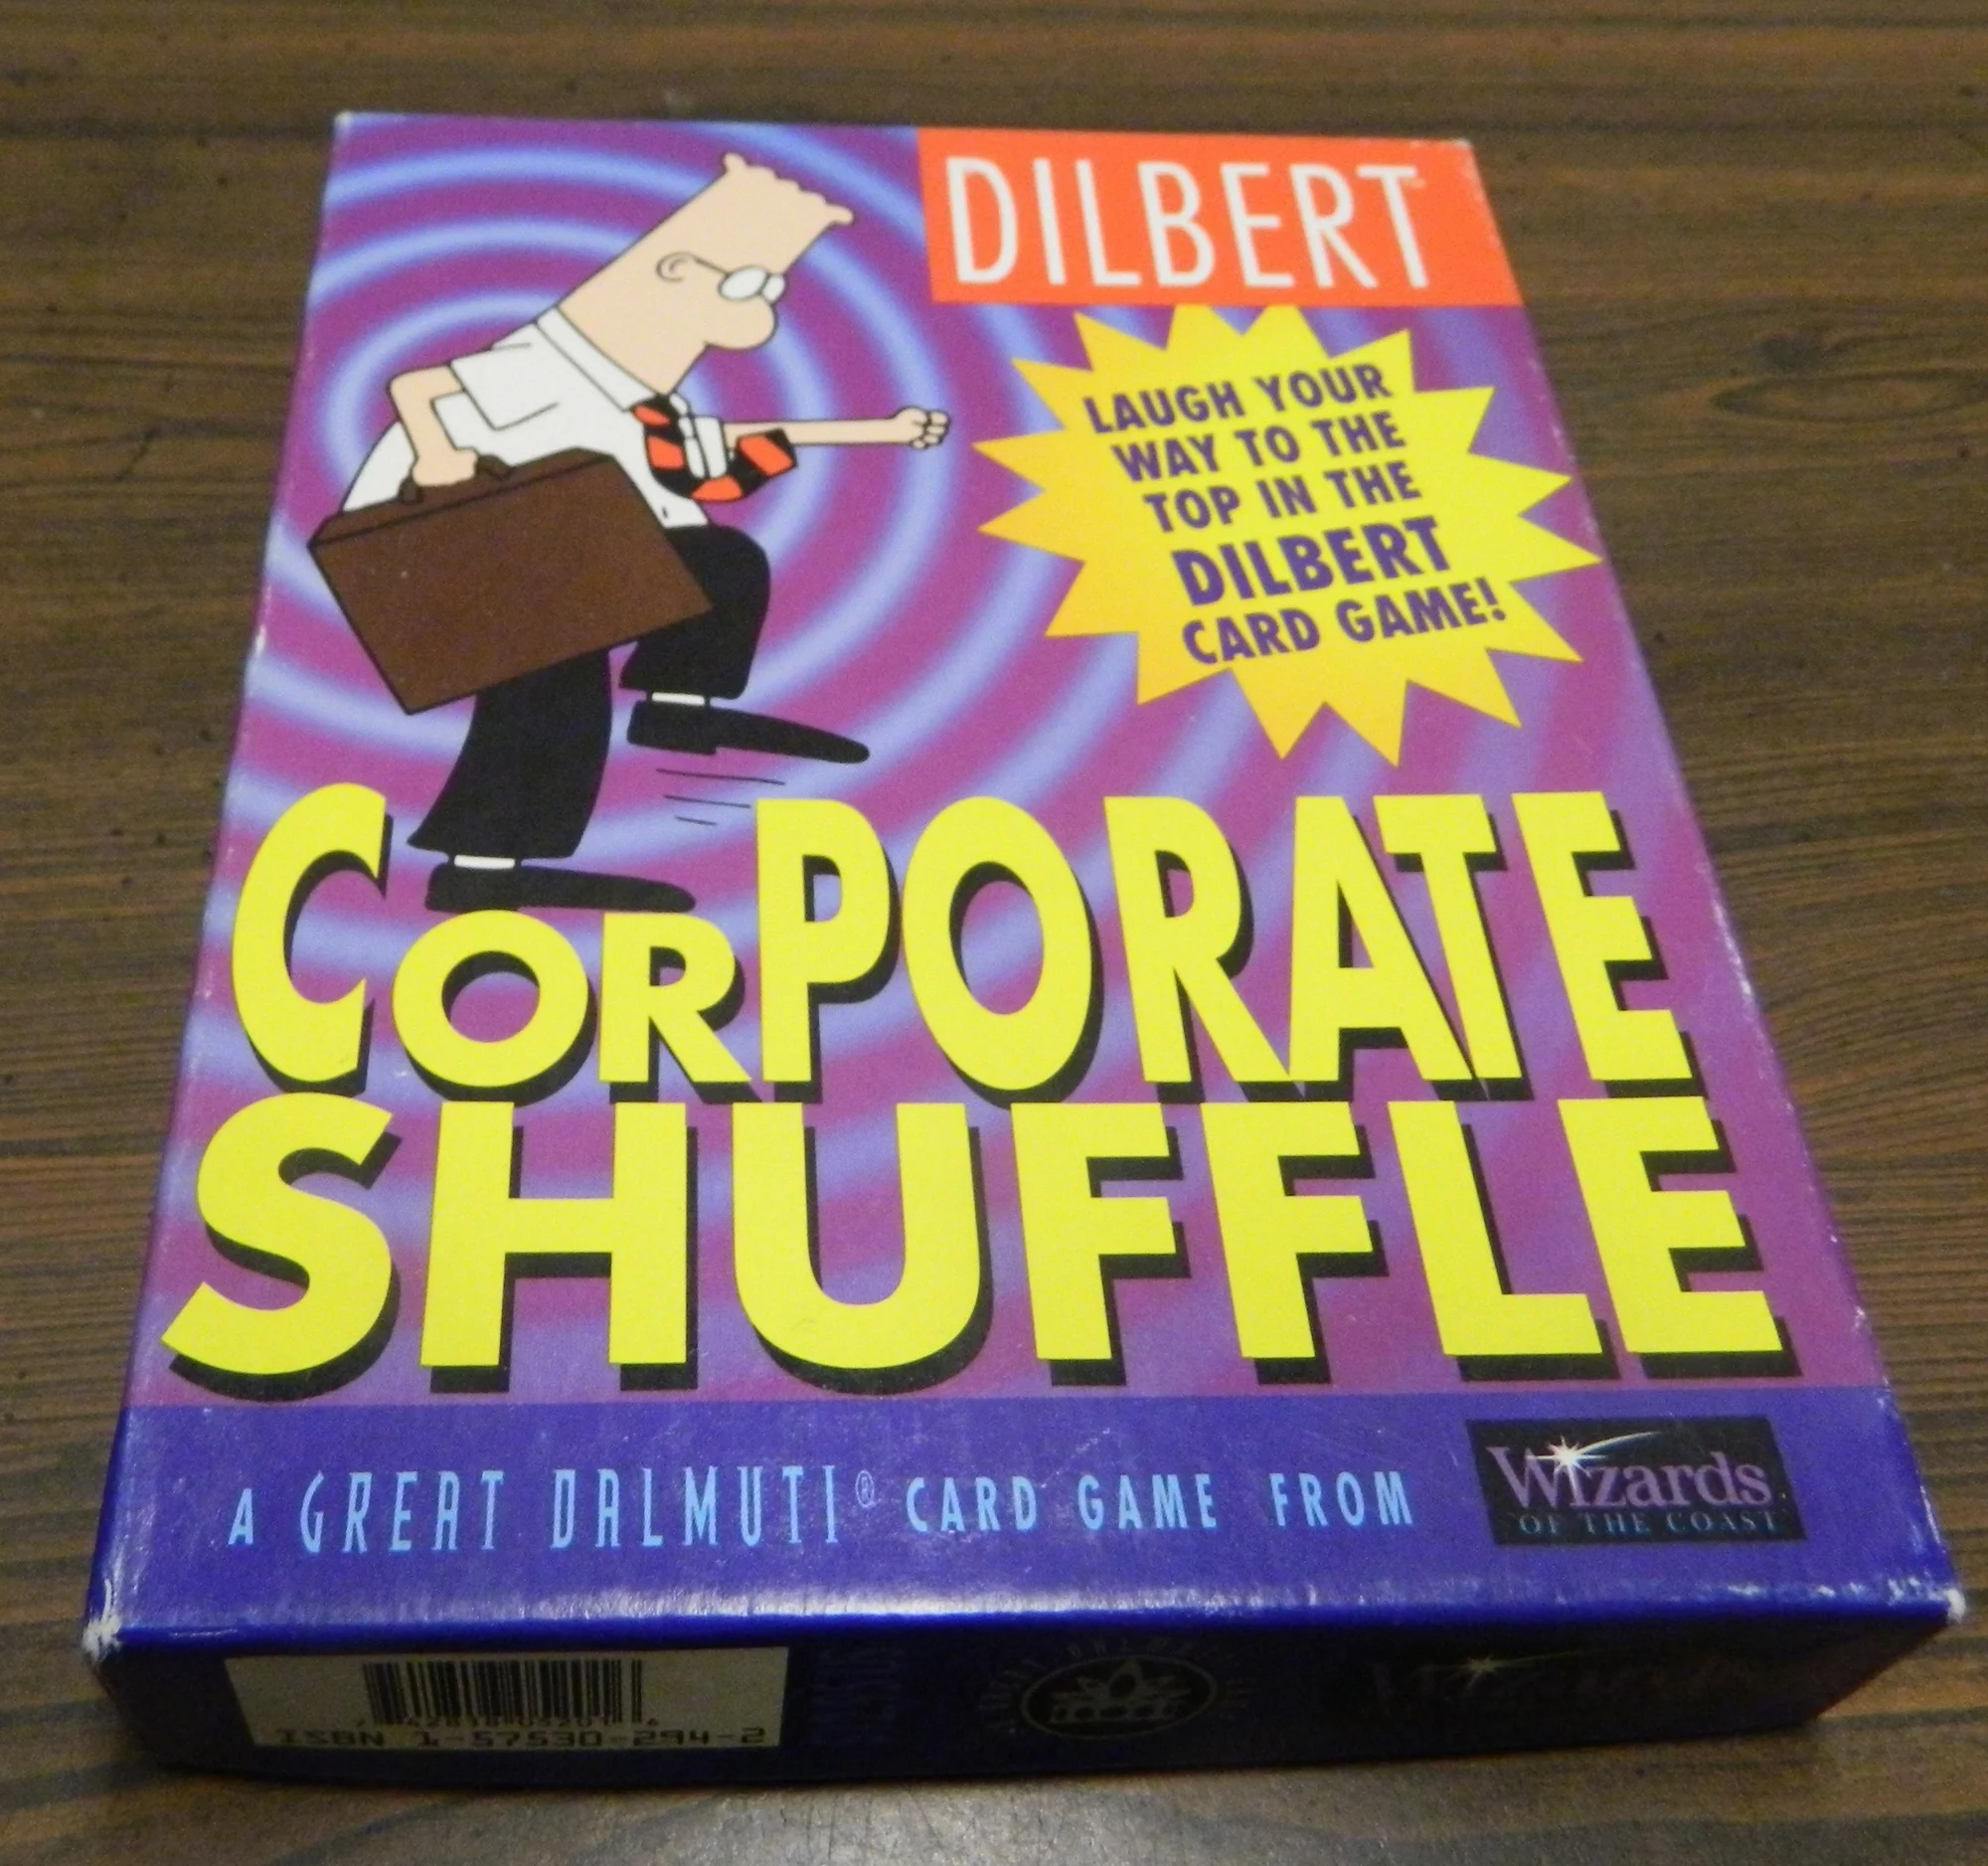 Box for Dilbert Corporate Shuffle